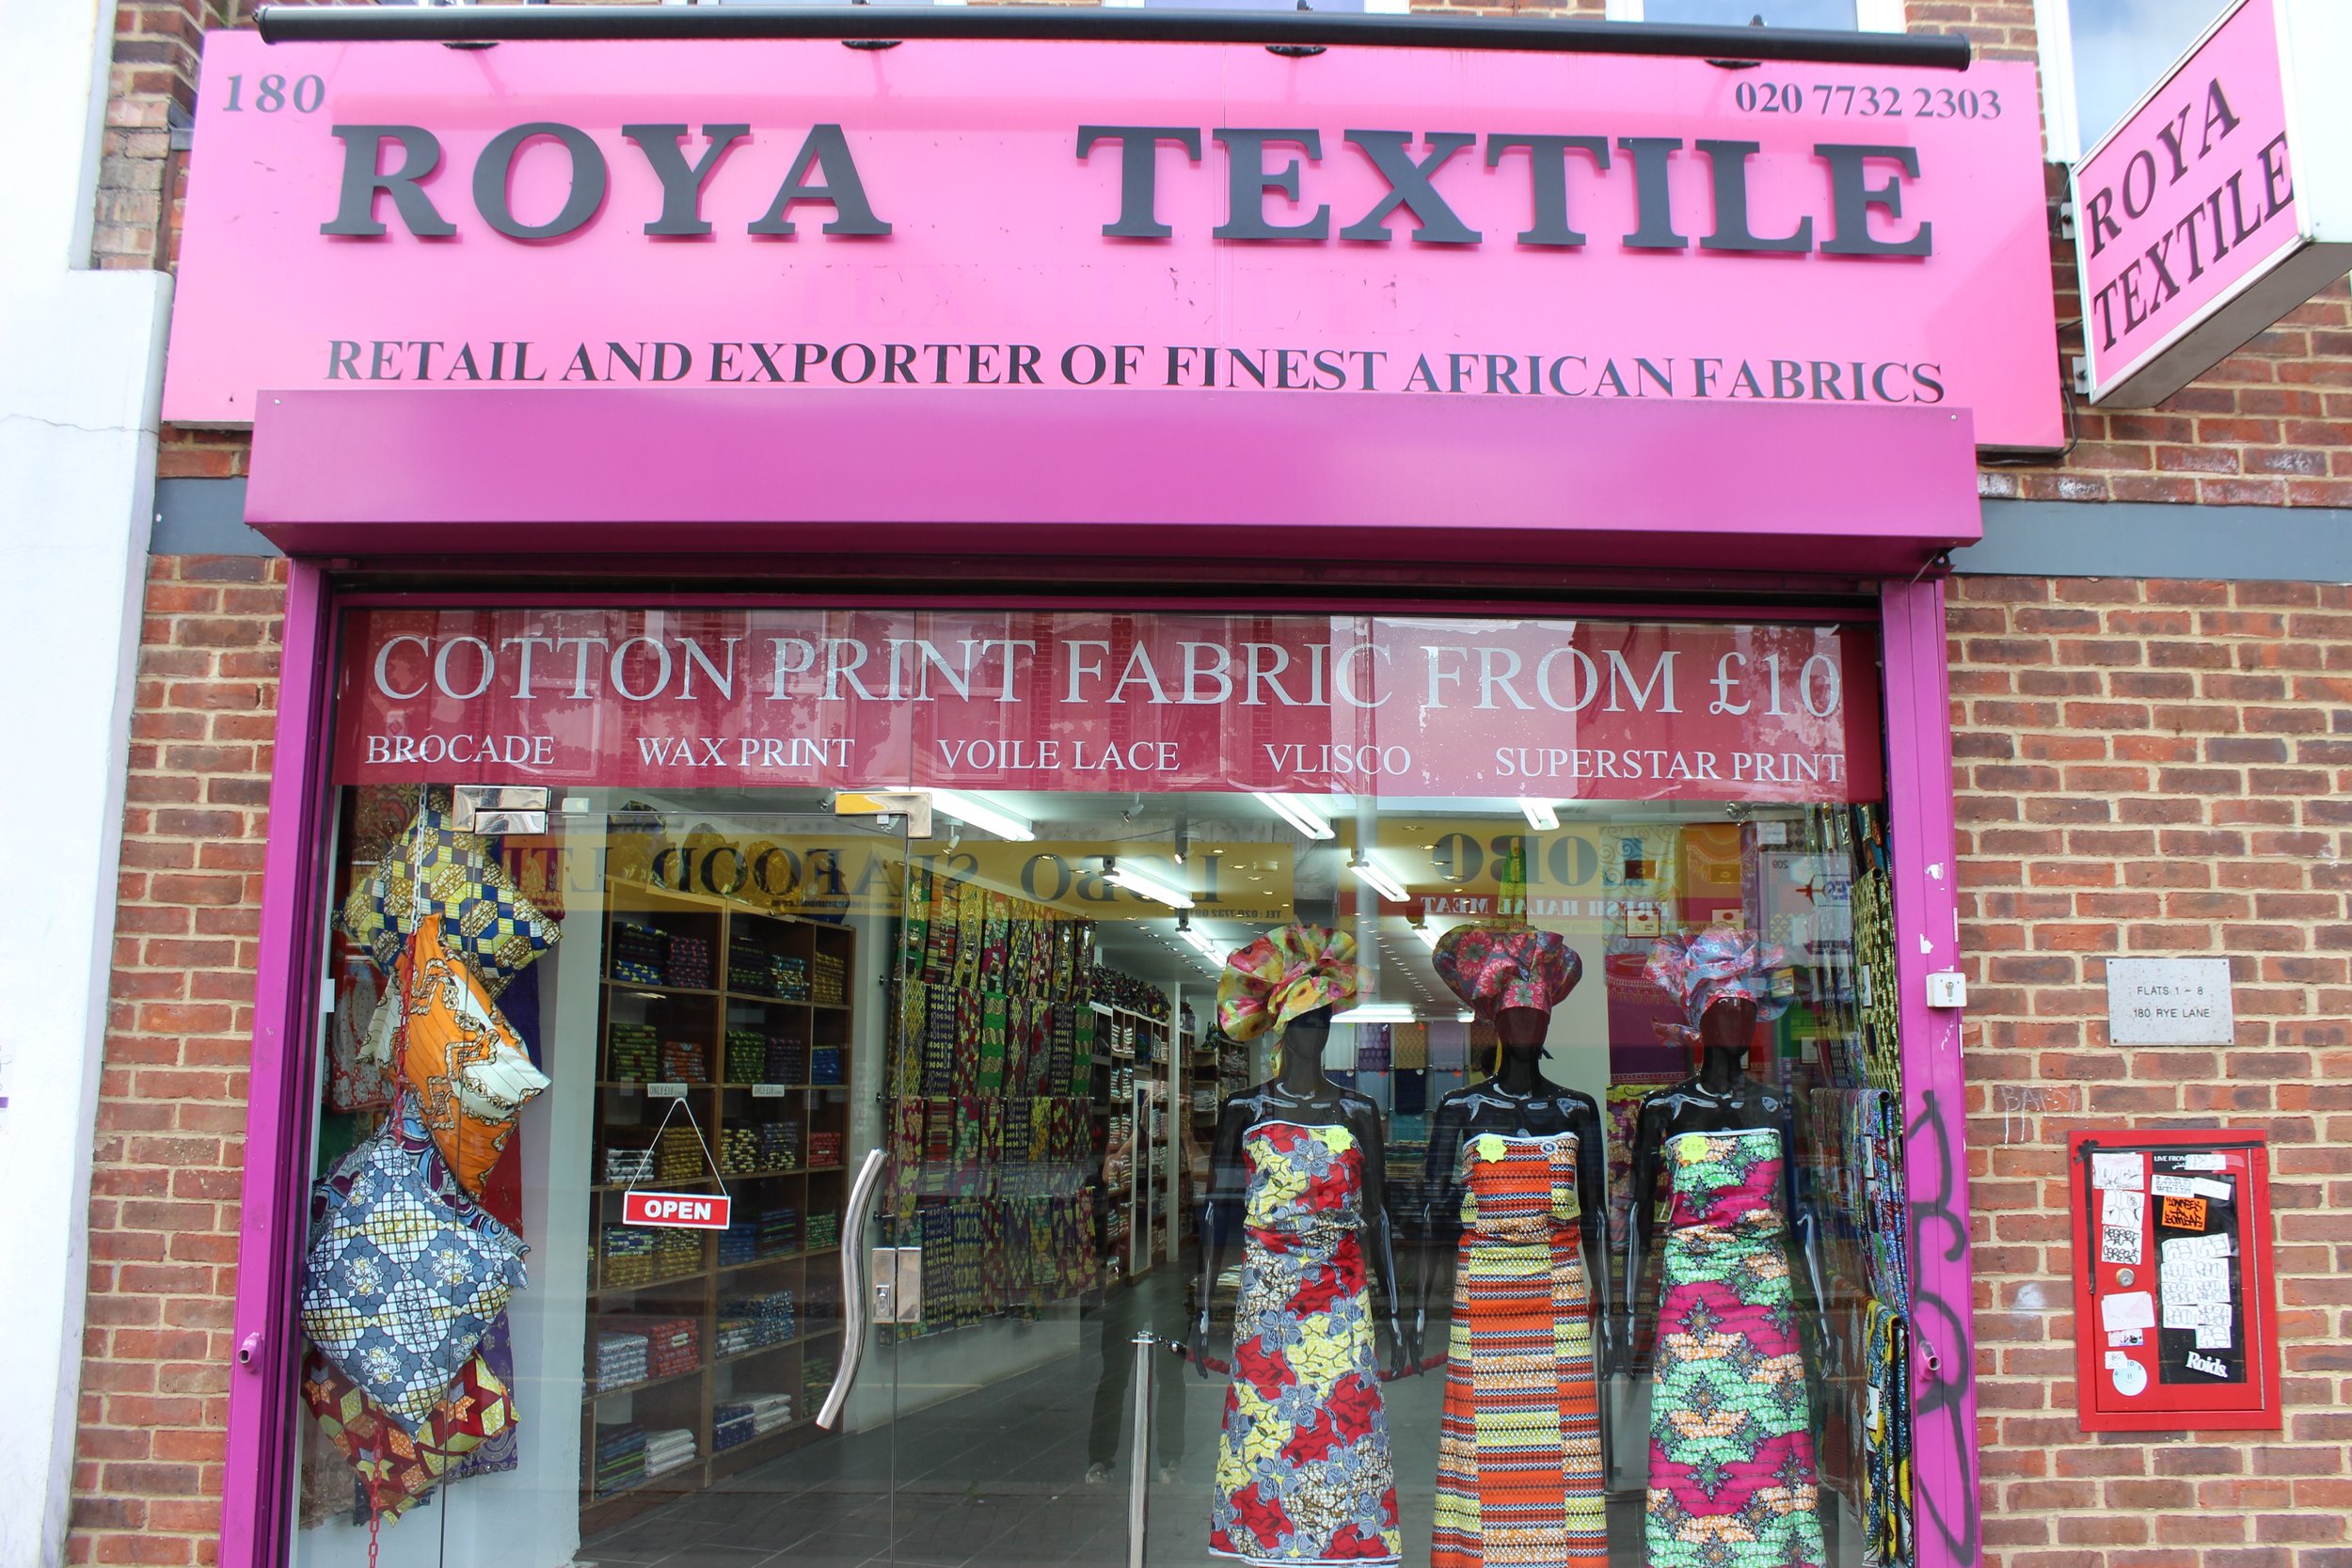 Roya Textile Fabric & Textiles Shop in Peckham South London Club